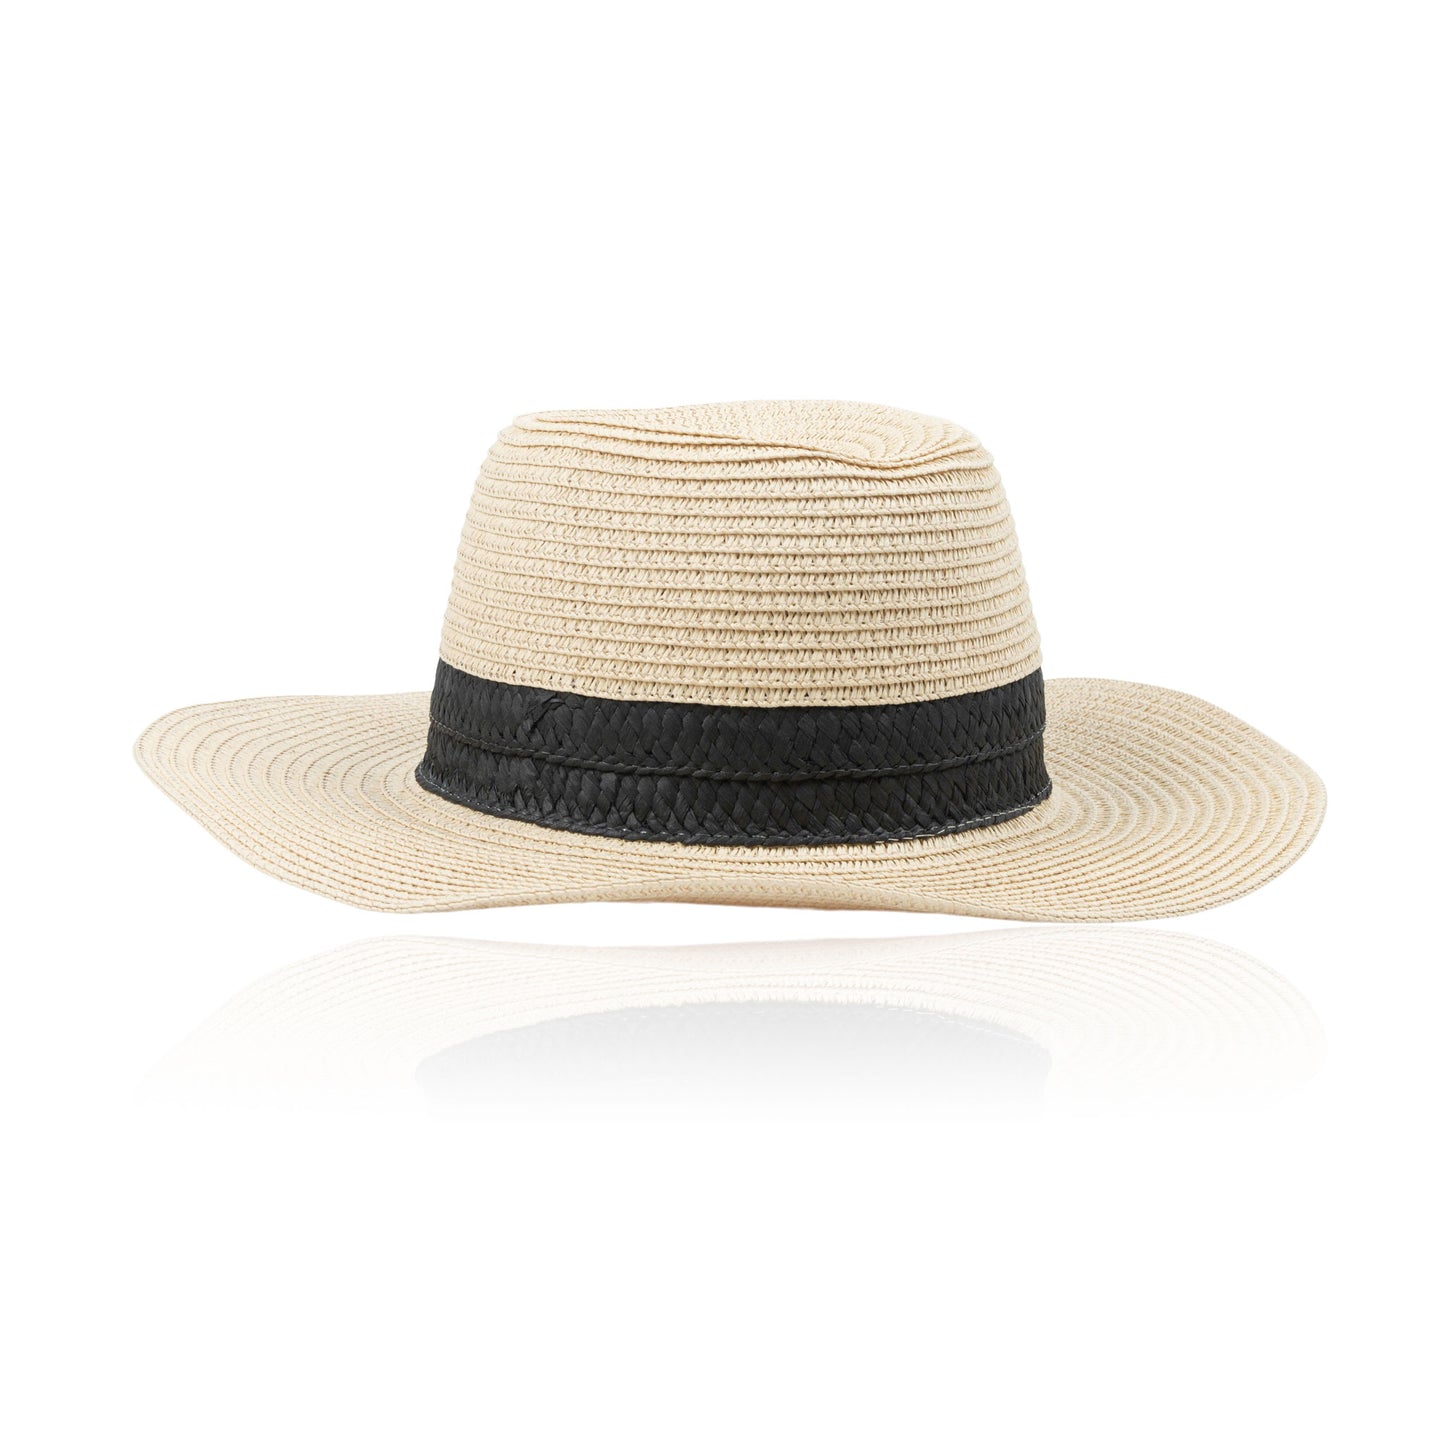 Irulan Woven Striped Panama Fedora Floppy Sun Hat